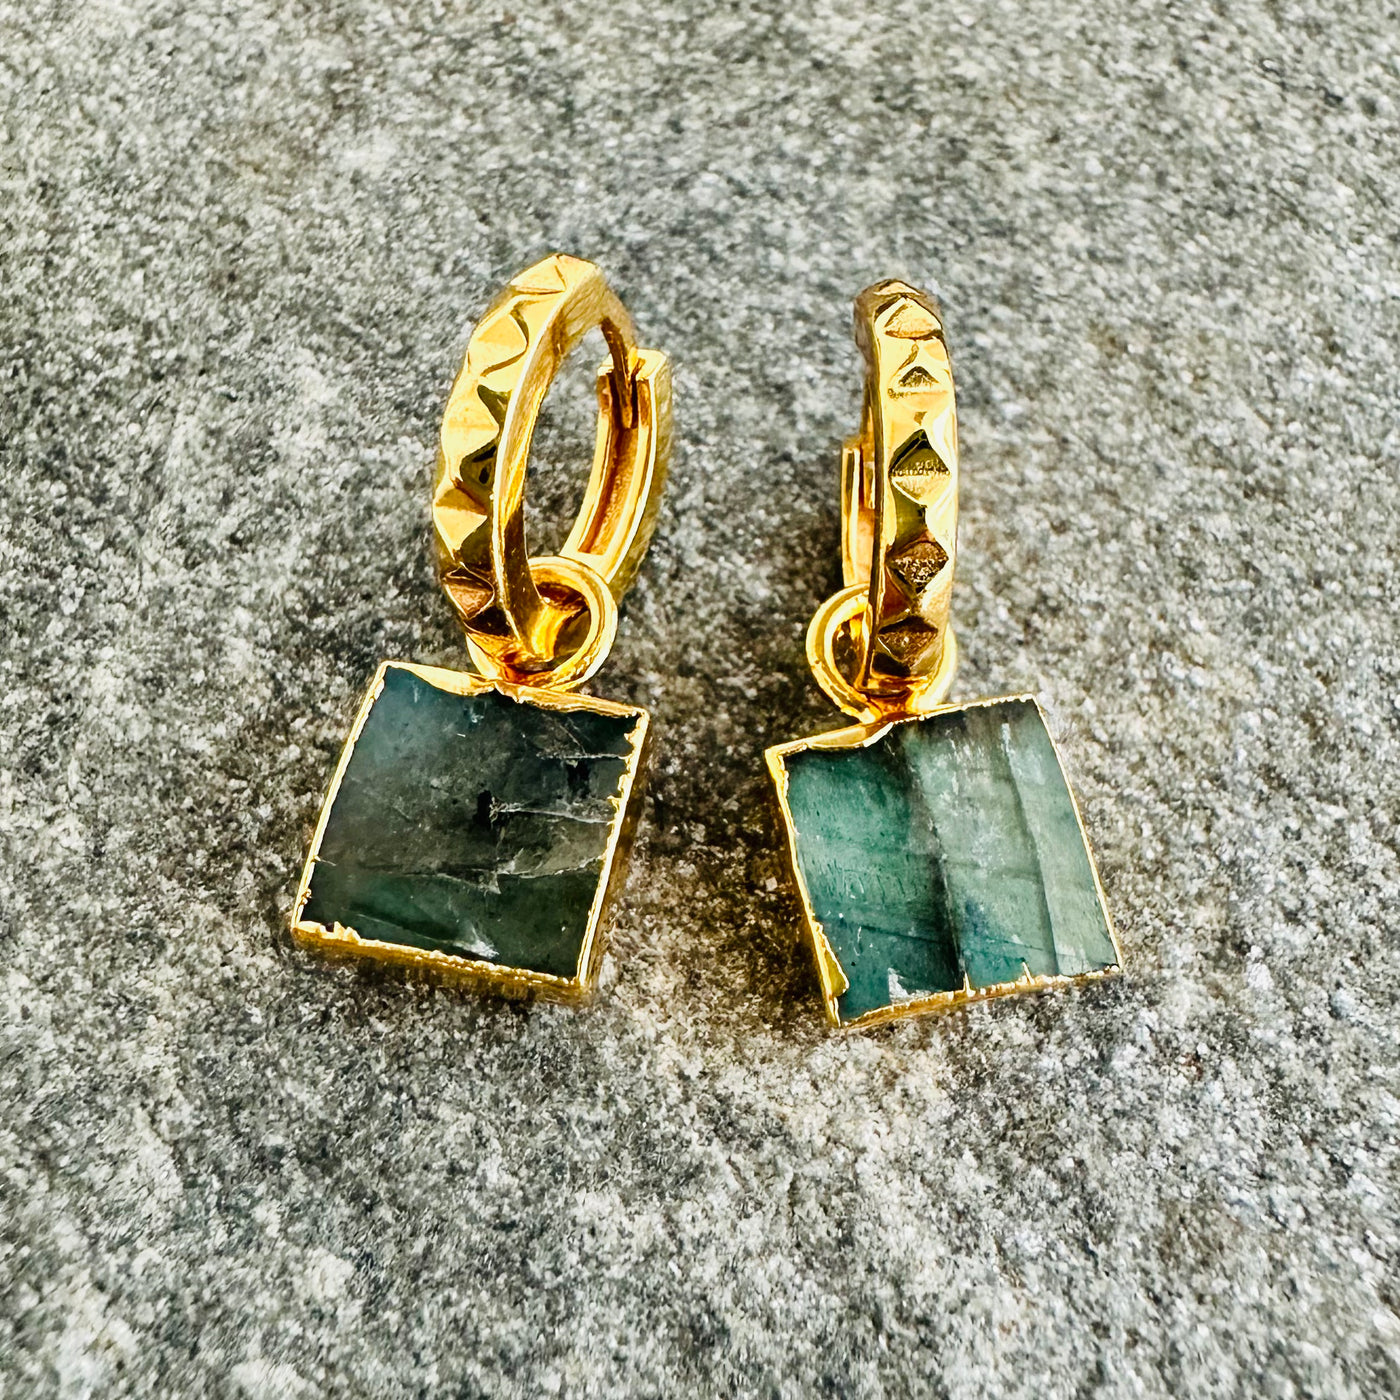 The Square Labradorite gold hoop earrings